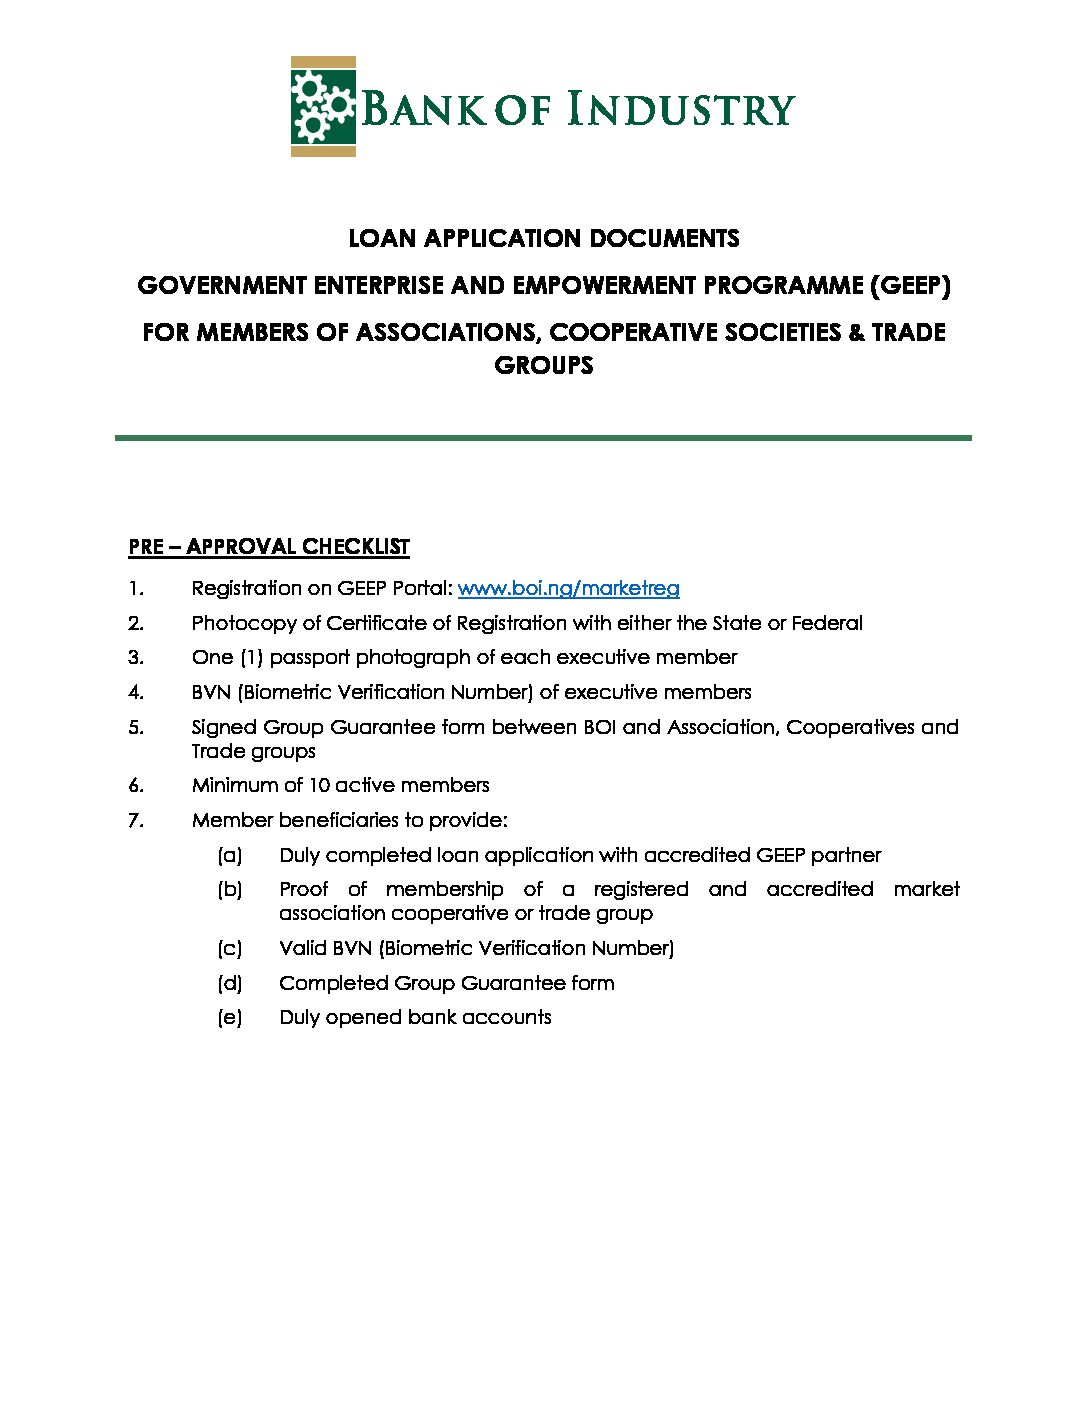 LOAN APPLICATION CHECKLIST GEEP 1 pdf AMCON Recruitment